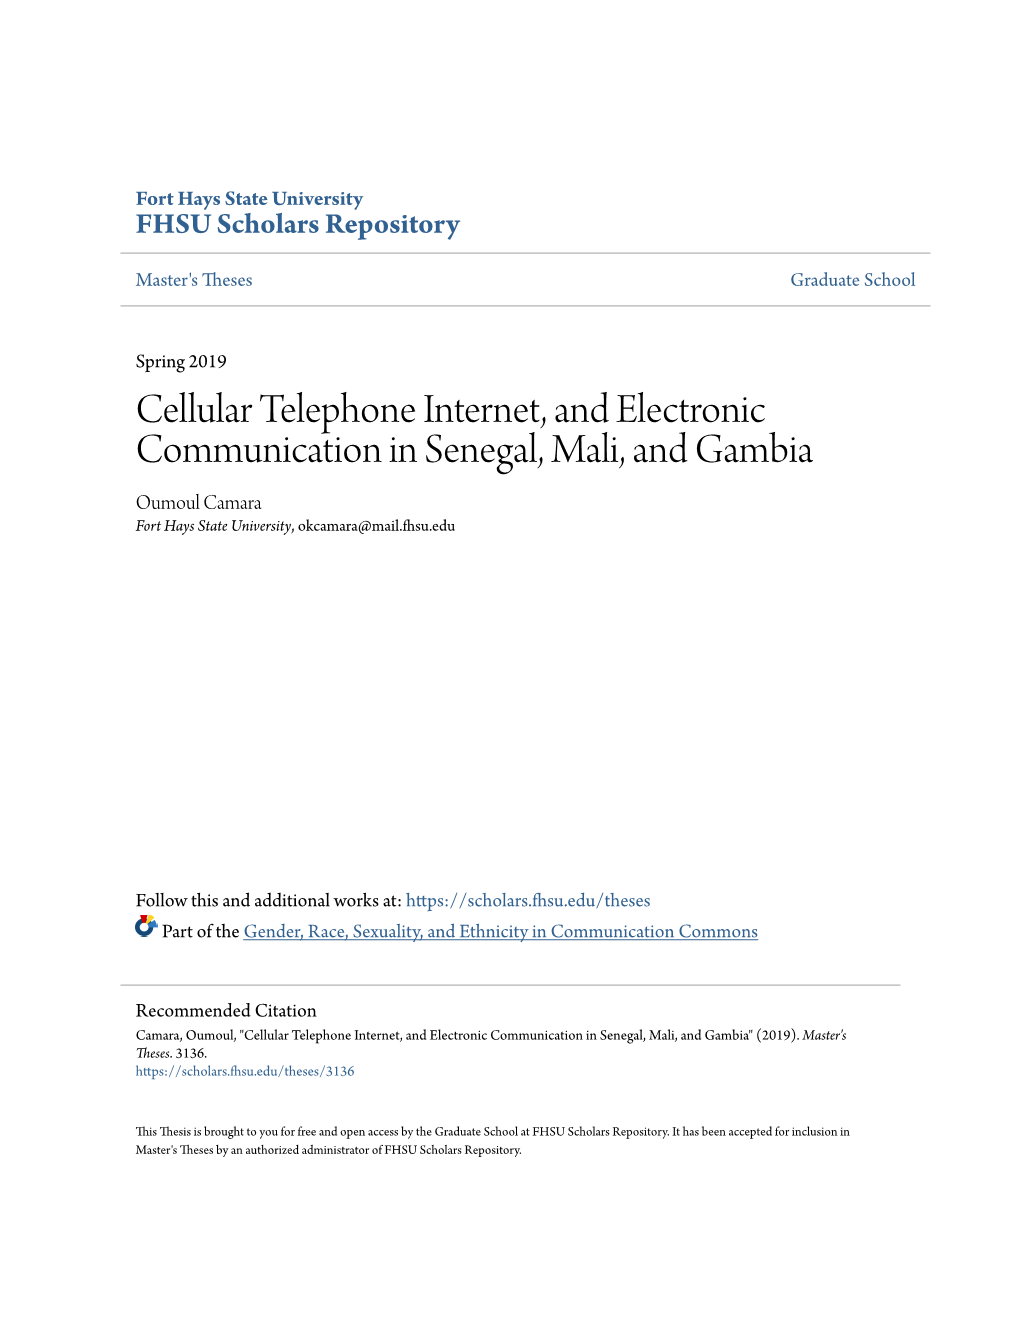 Cellular Telephone Internet, and Electronic Communication in Senegal, Mali, and Gambia Oumoul Camara Fort Hays State University, Okcamara@Mail.Fhsu.Edu